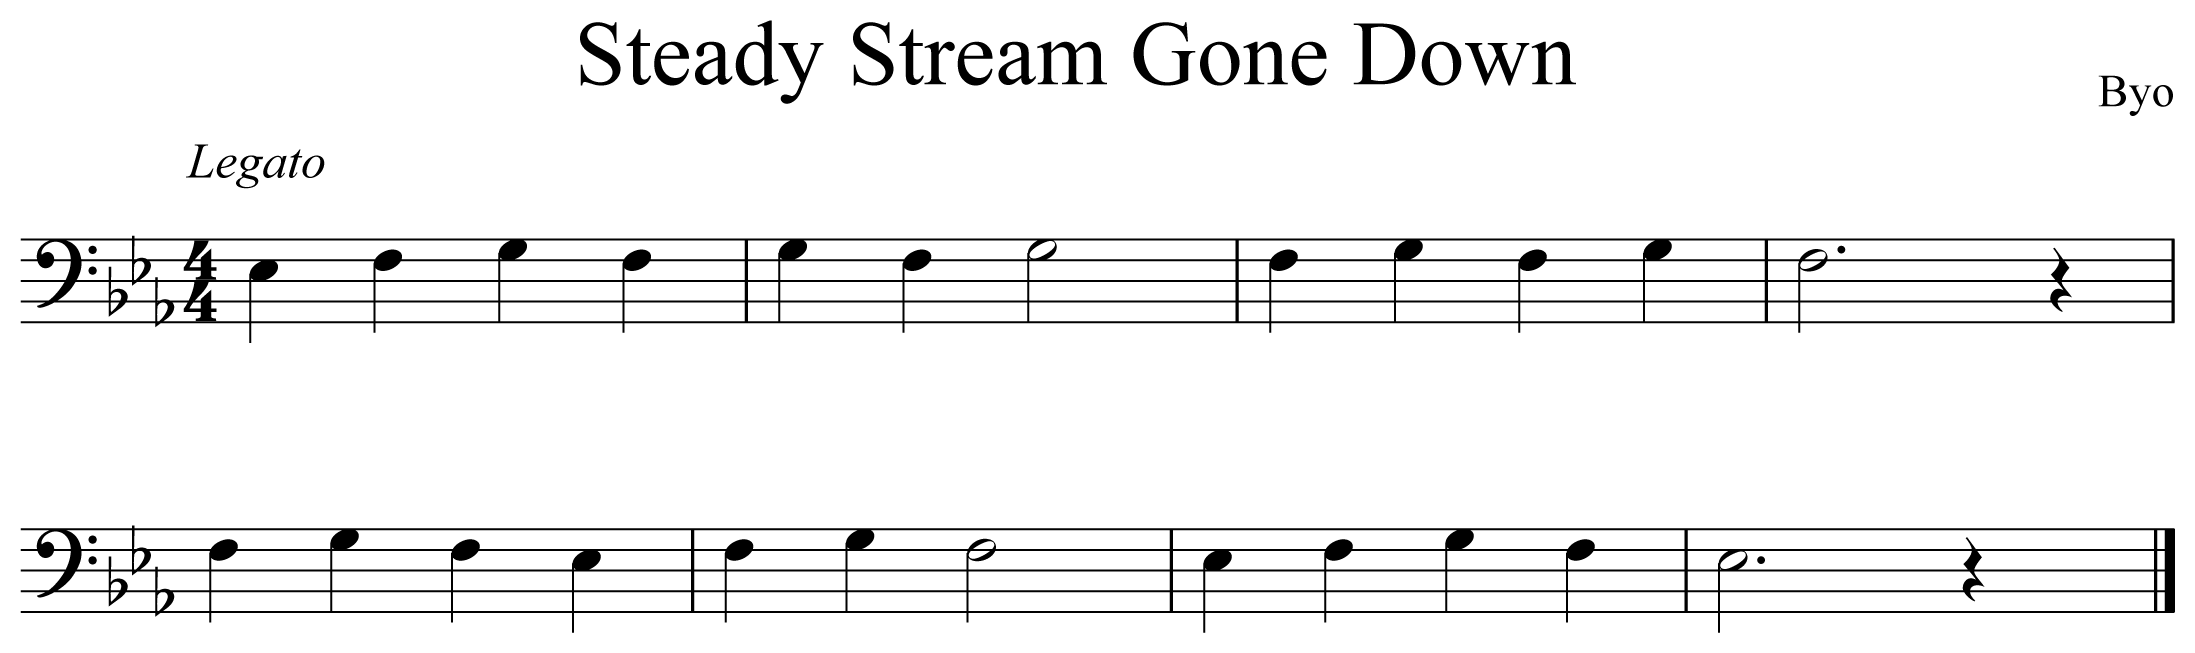 Steady Stream Gone Down Music Notation Euphonium